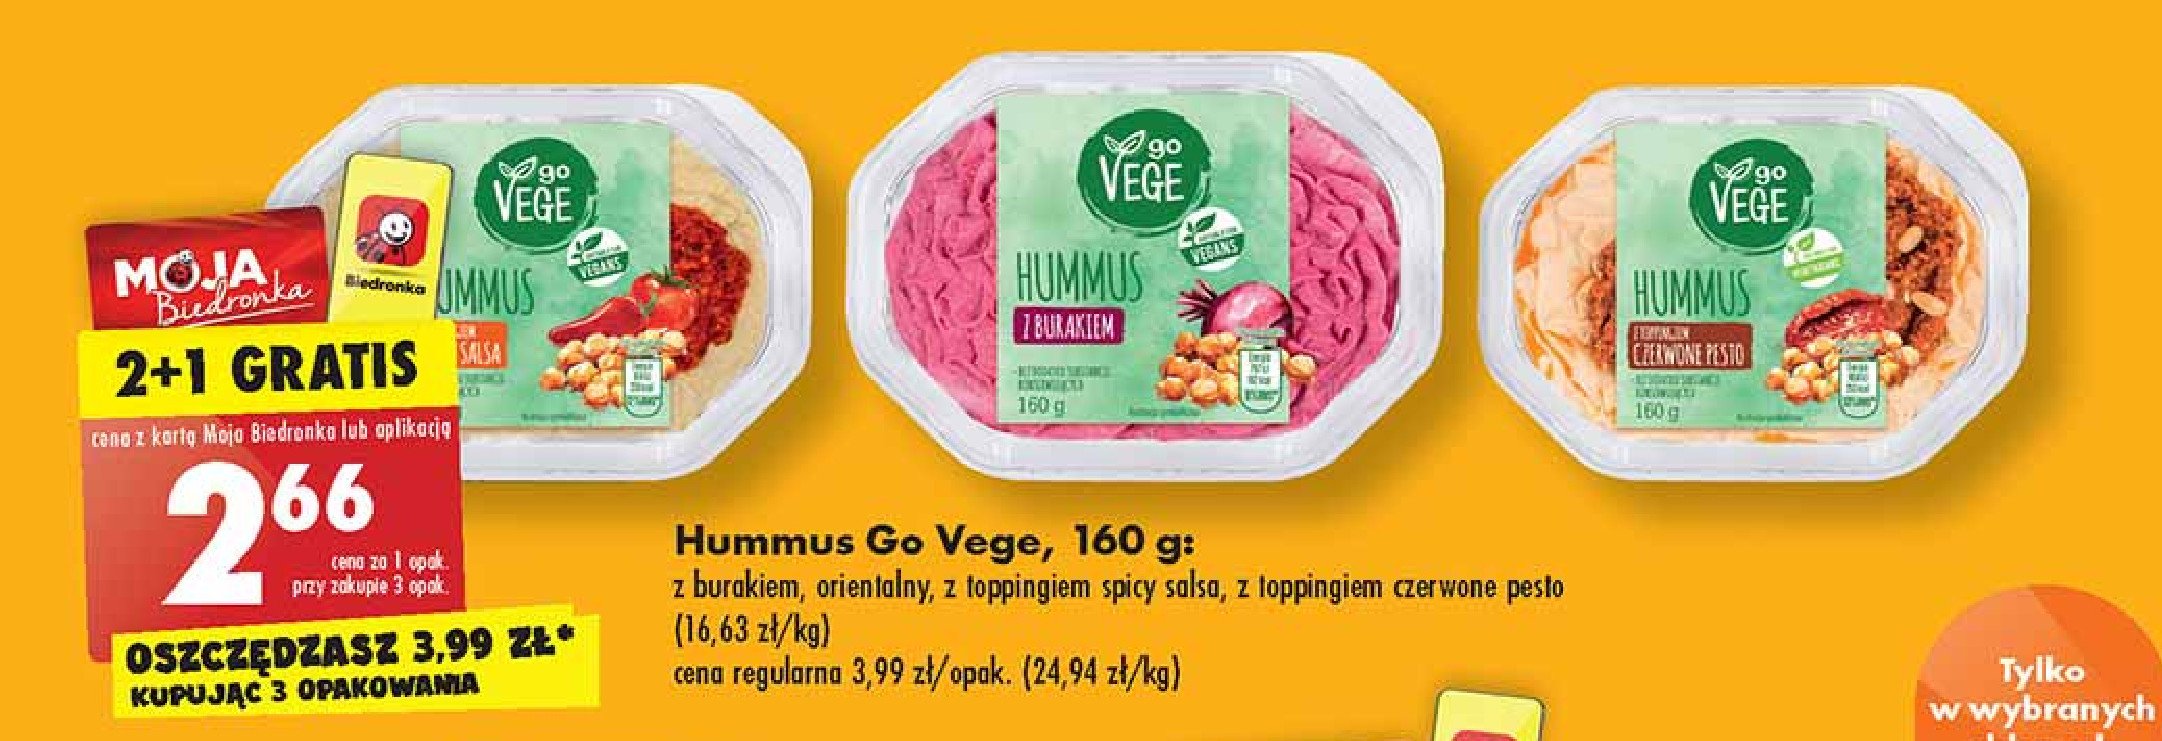 Hummus curry Govege promocja